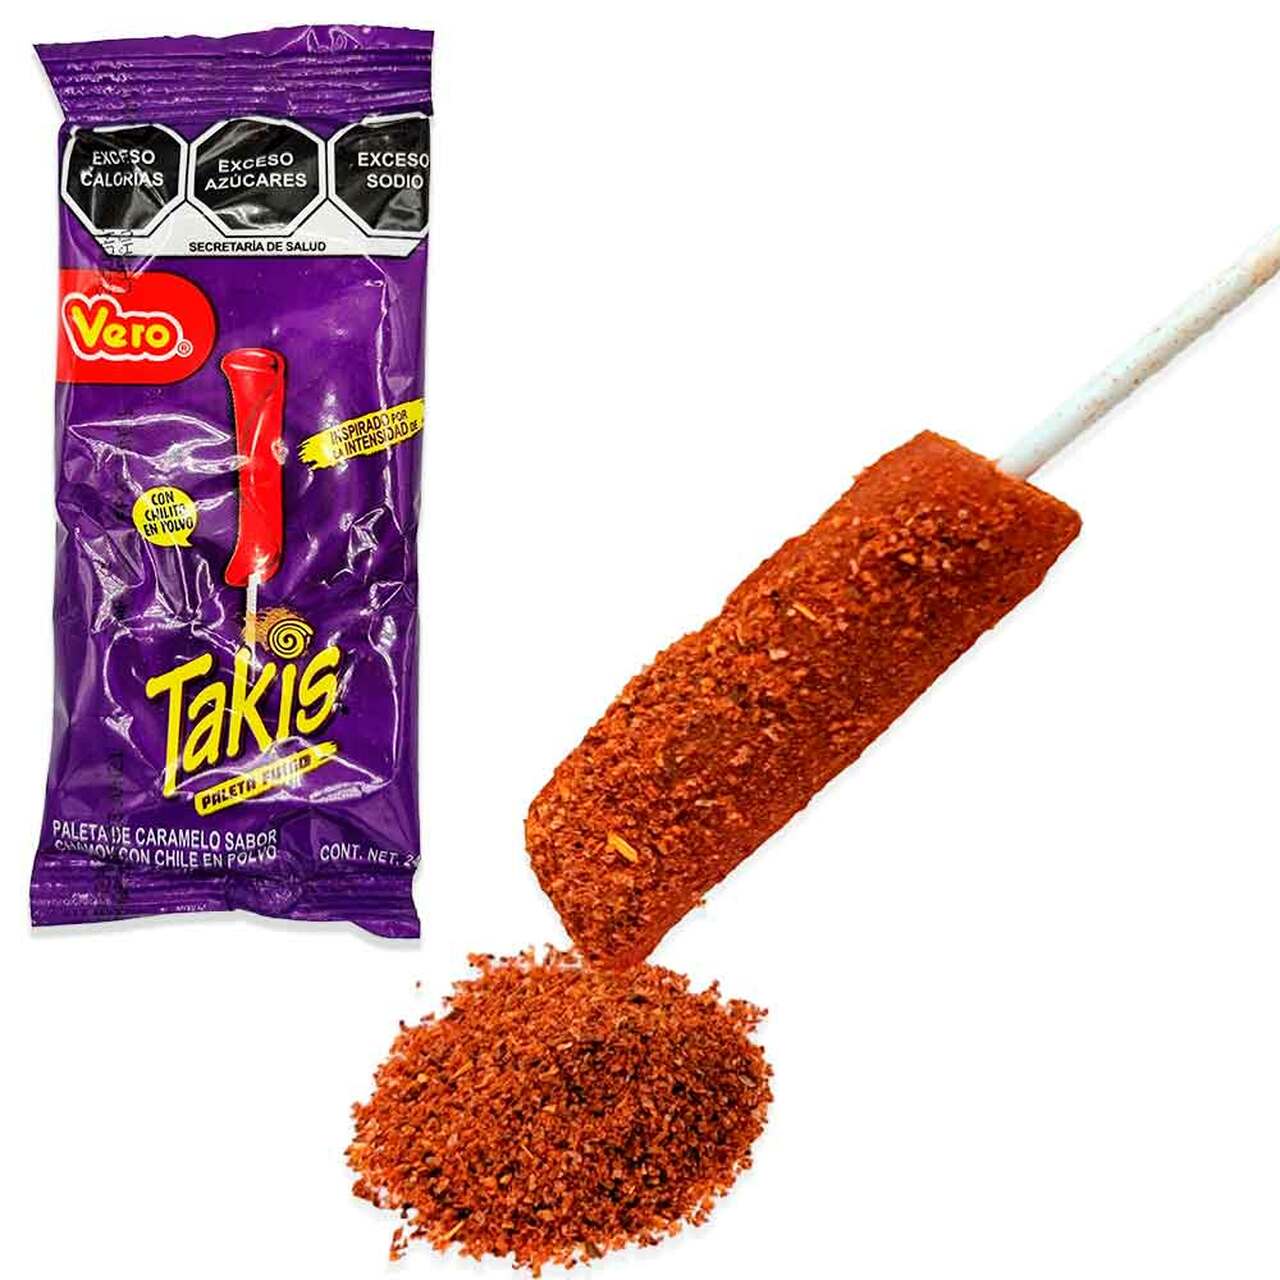 Takis Fuego lollipop